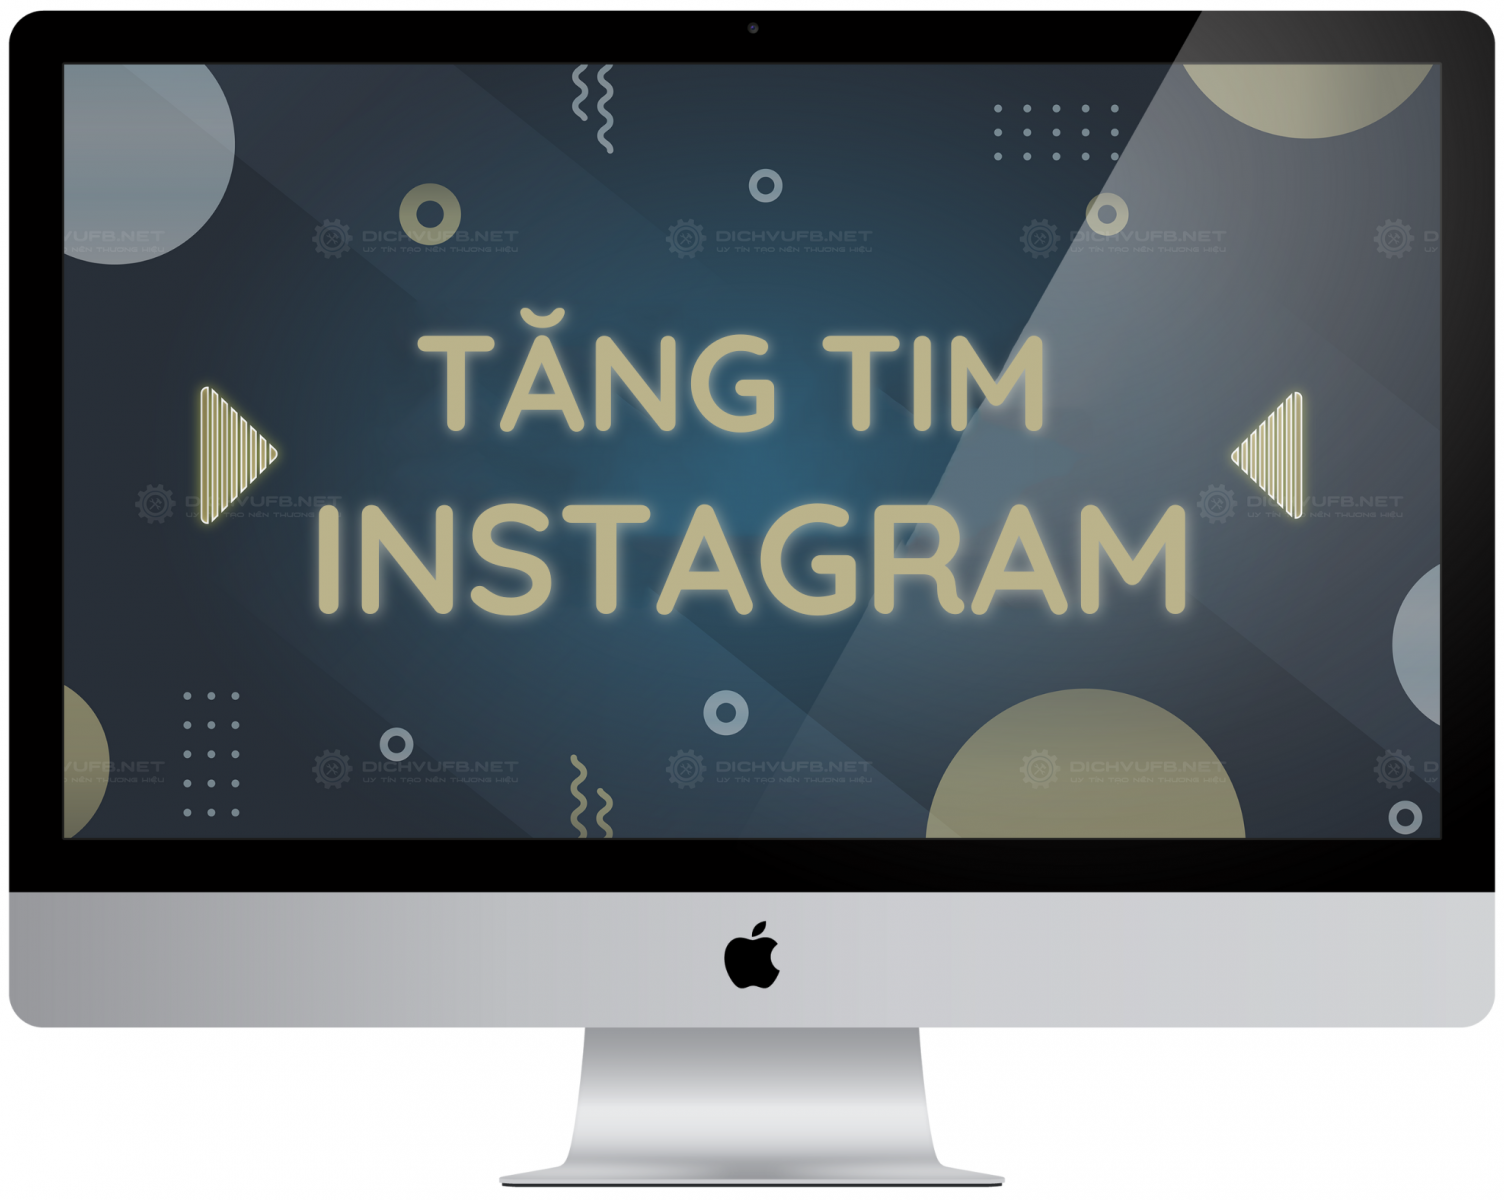 Tăng Tim Instagram